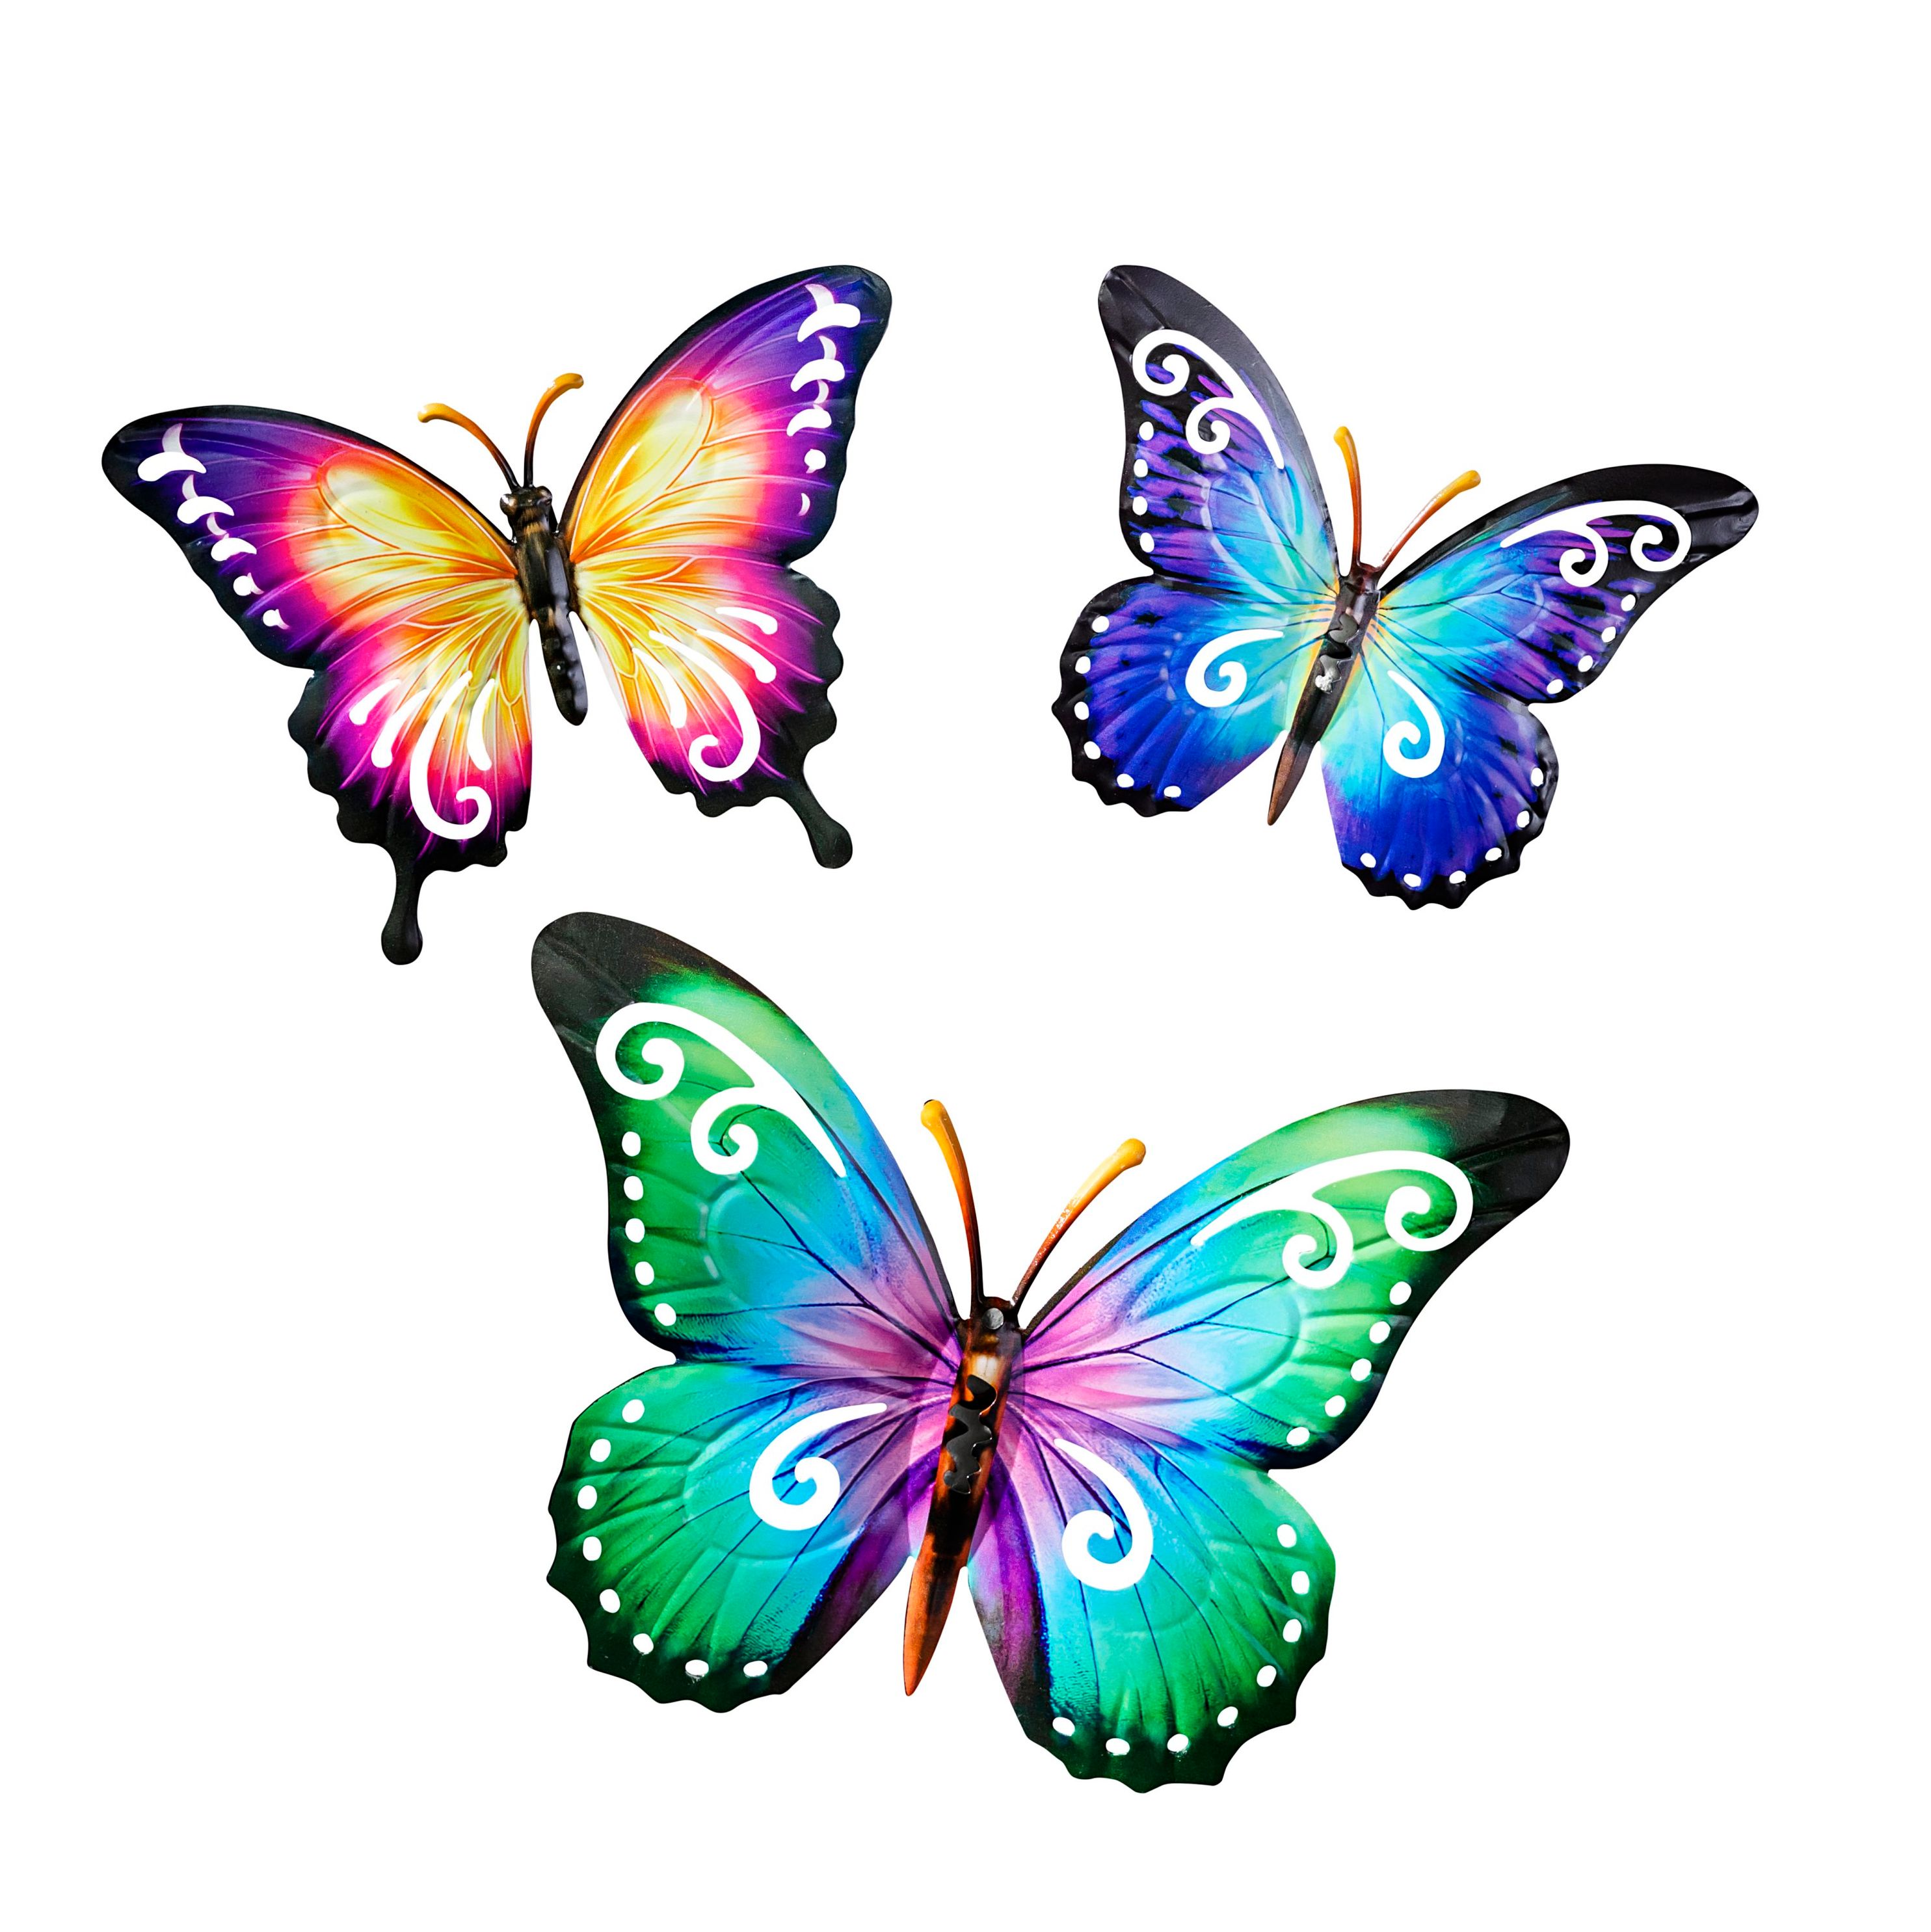 Wanddeko Schmetterling, 3er-Set jetzt bei Weltbild.de bestellen